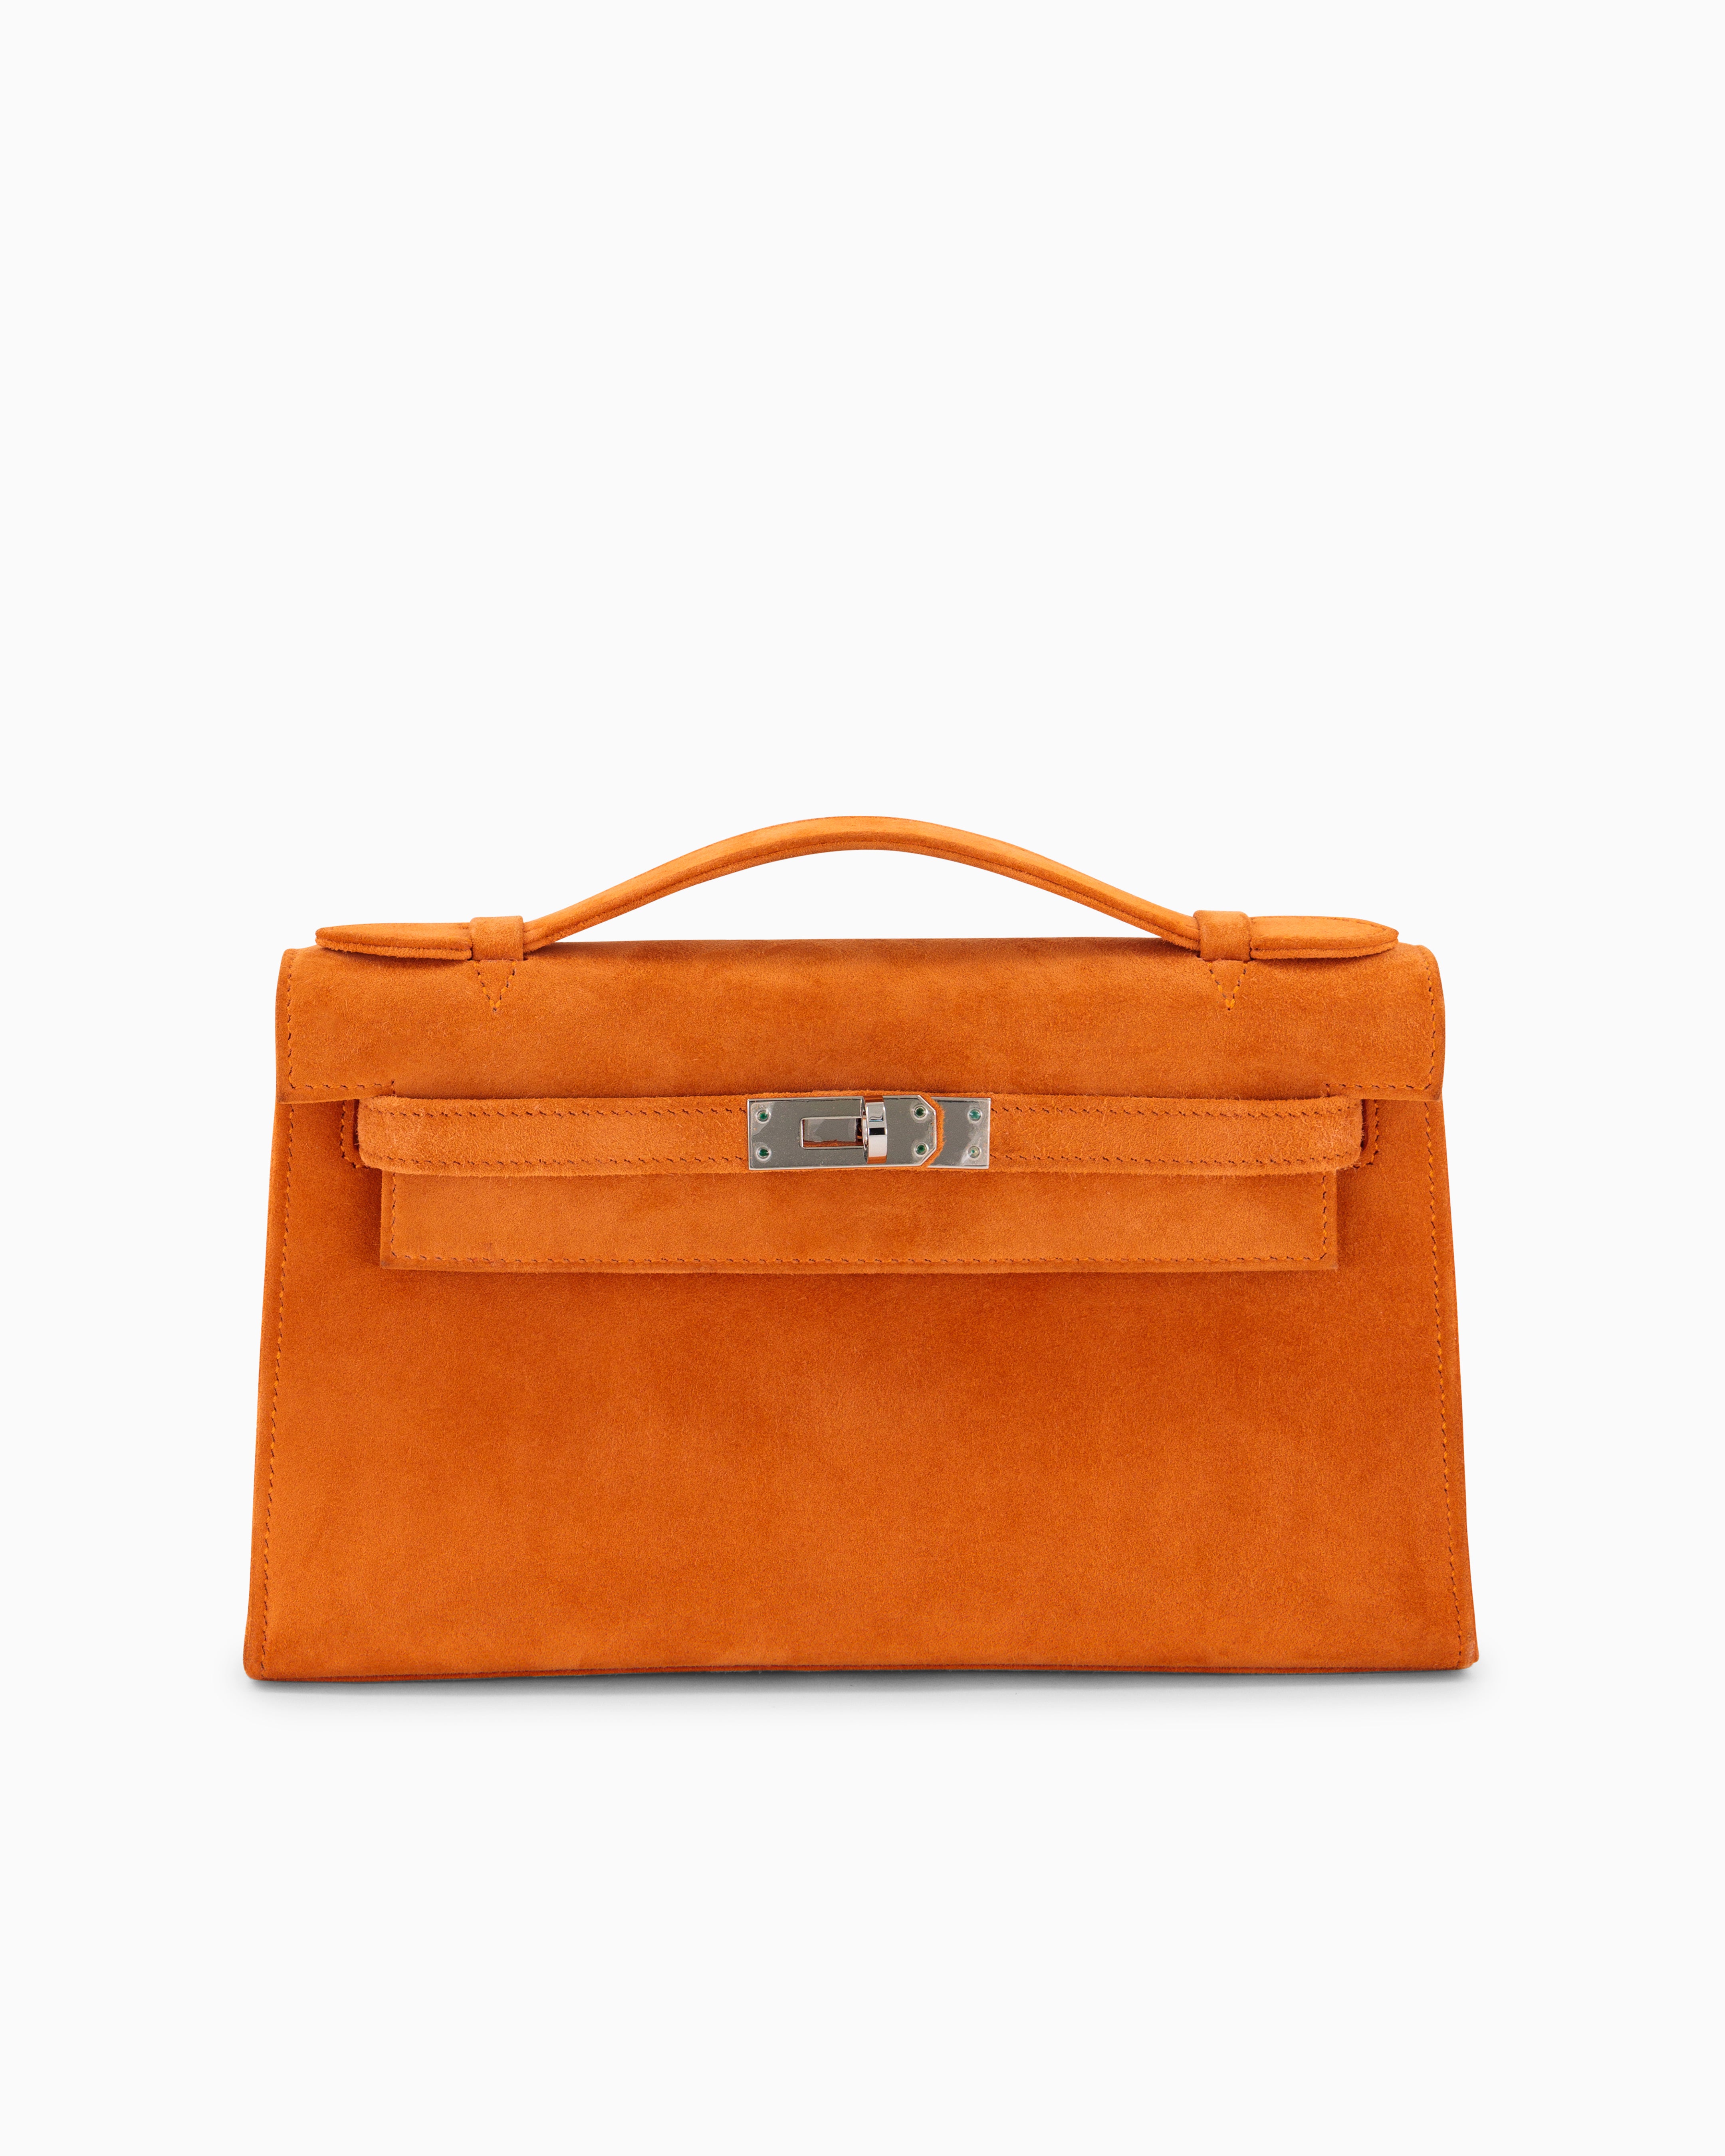 Pre-owned Kelly Pochette Doblis Orange Vintage Bag Palladium Hardware